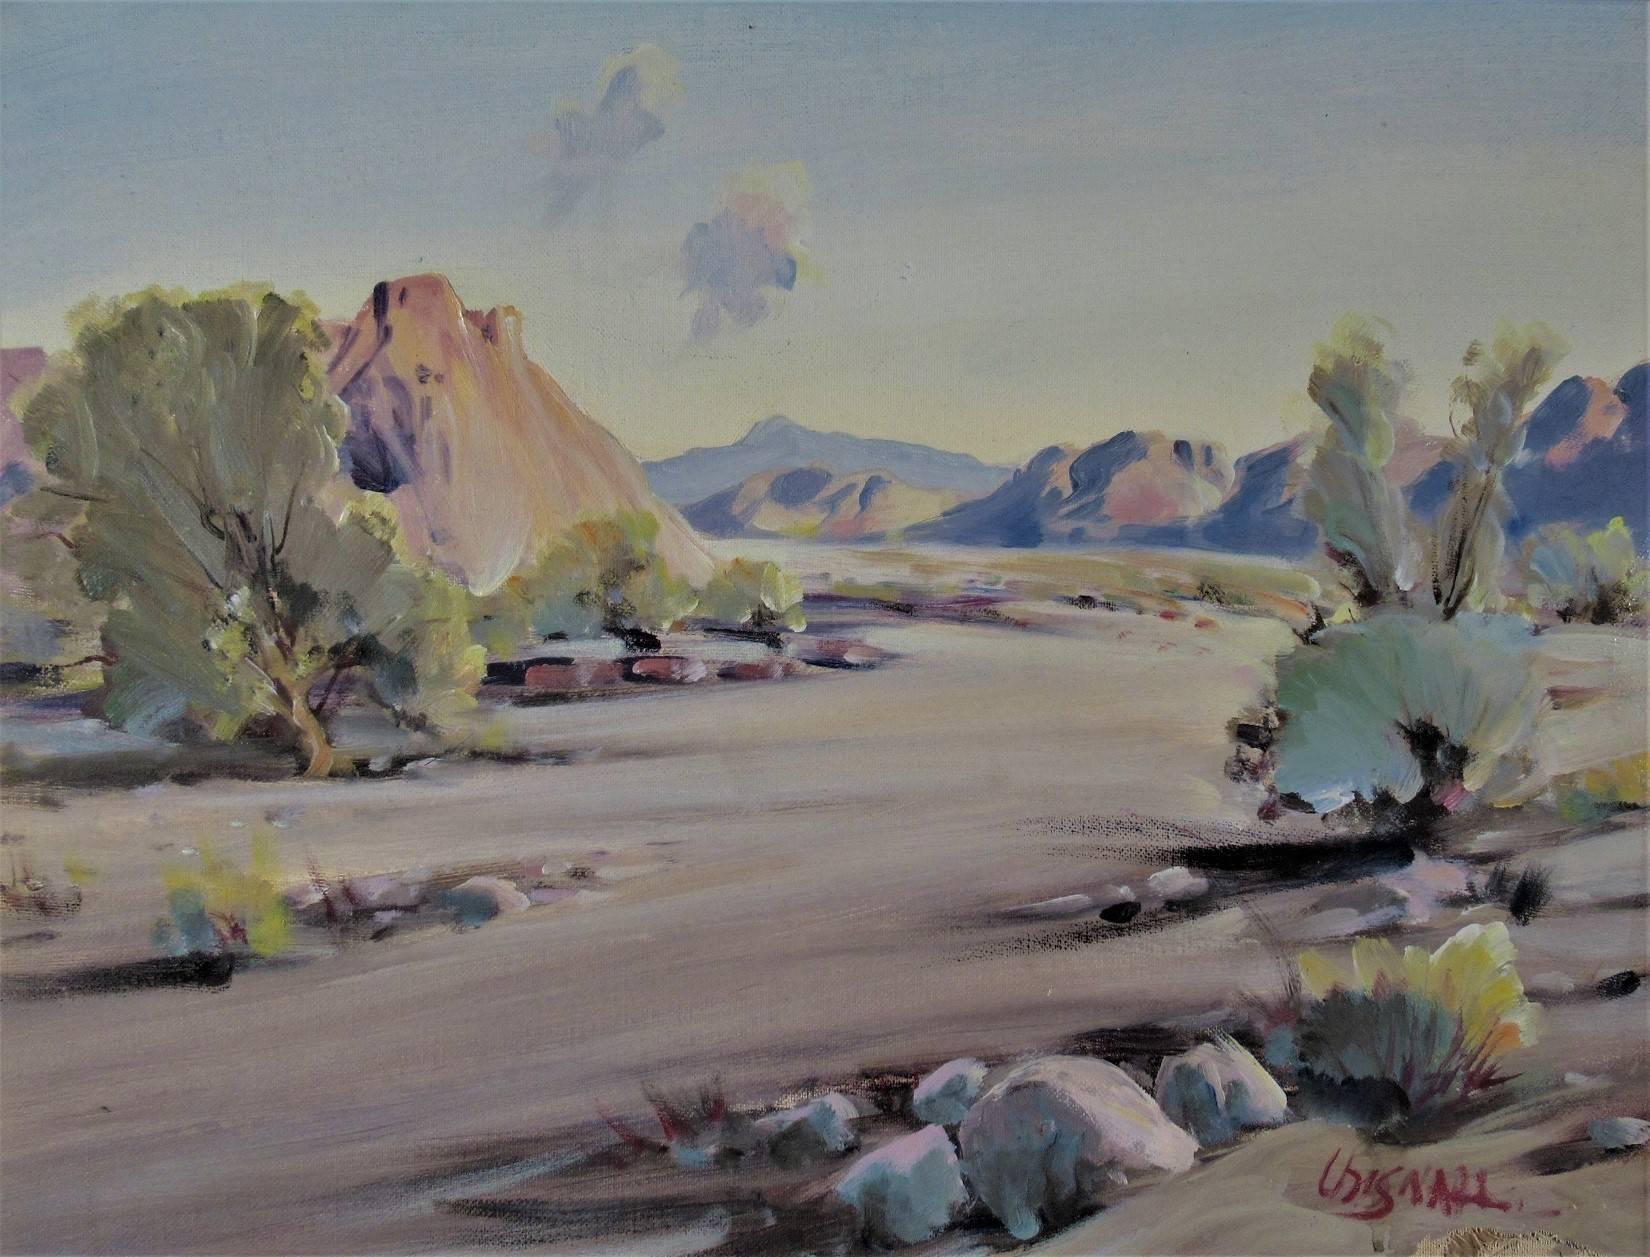 Desert Scene - Painting by Frederick Richard Chisnall